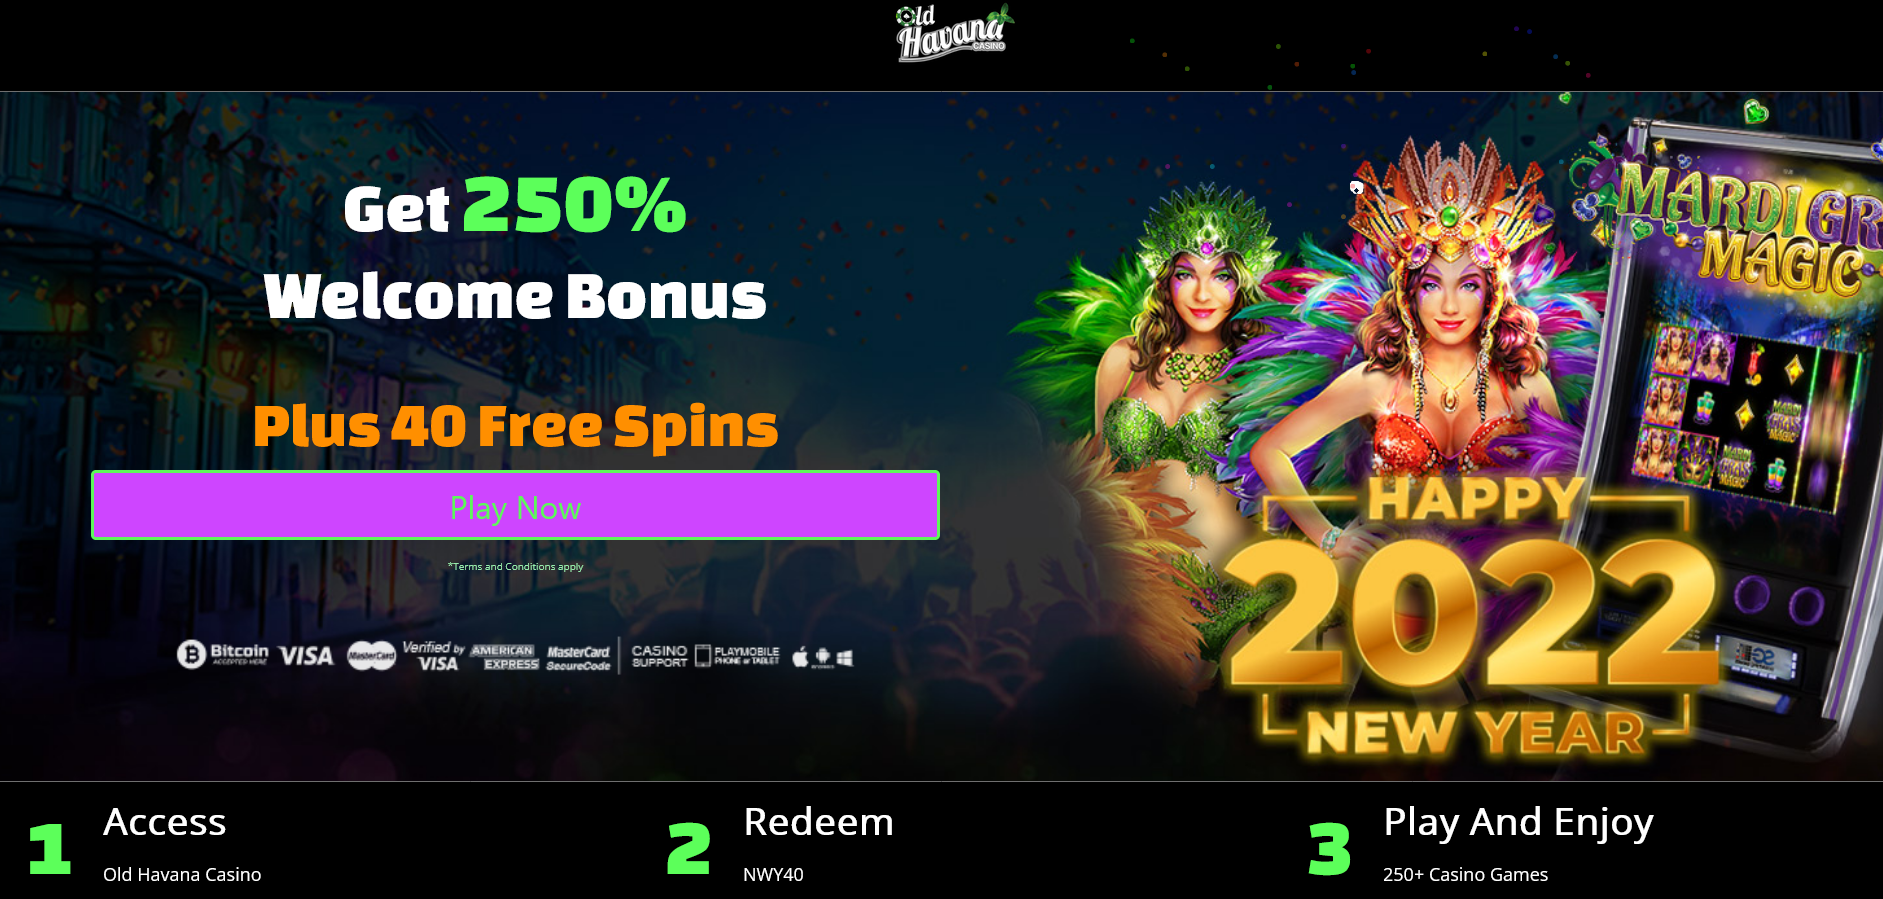 Get 250% Welcome
                                                Bonus Plus 40 Free
                                                Spins